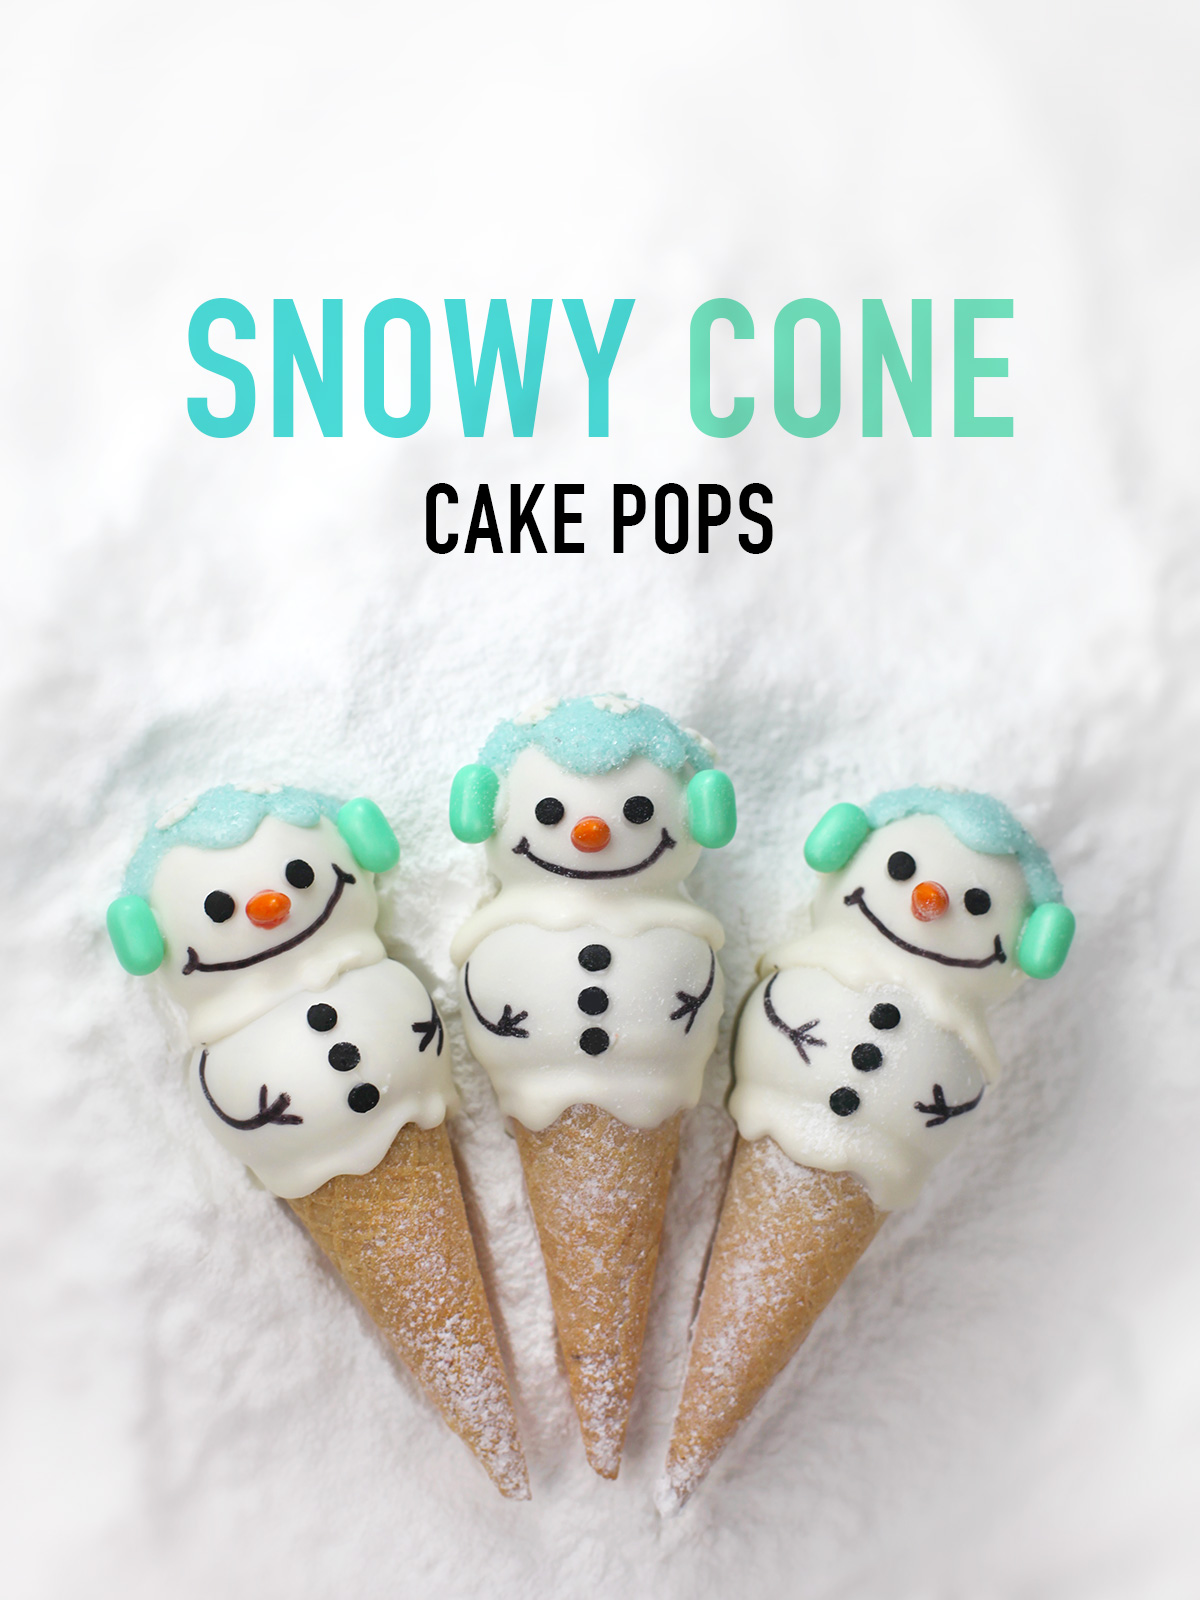 Snow cakes lil snowycakesy :